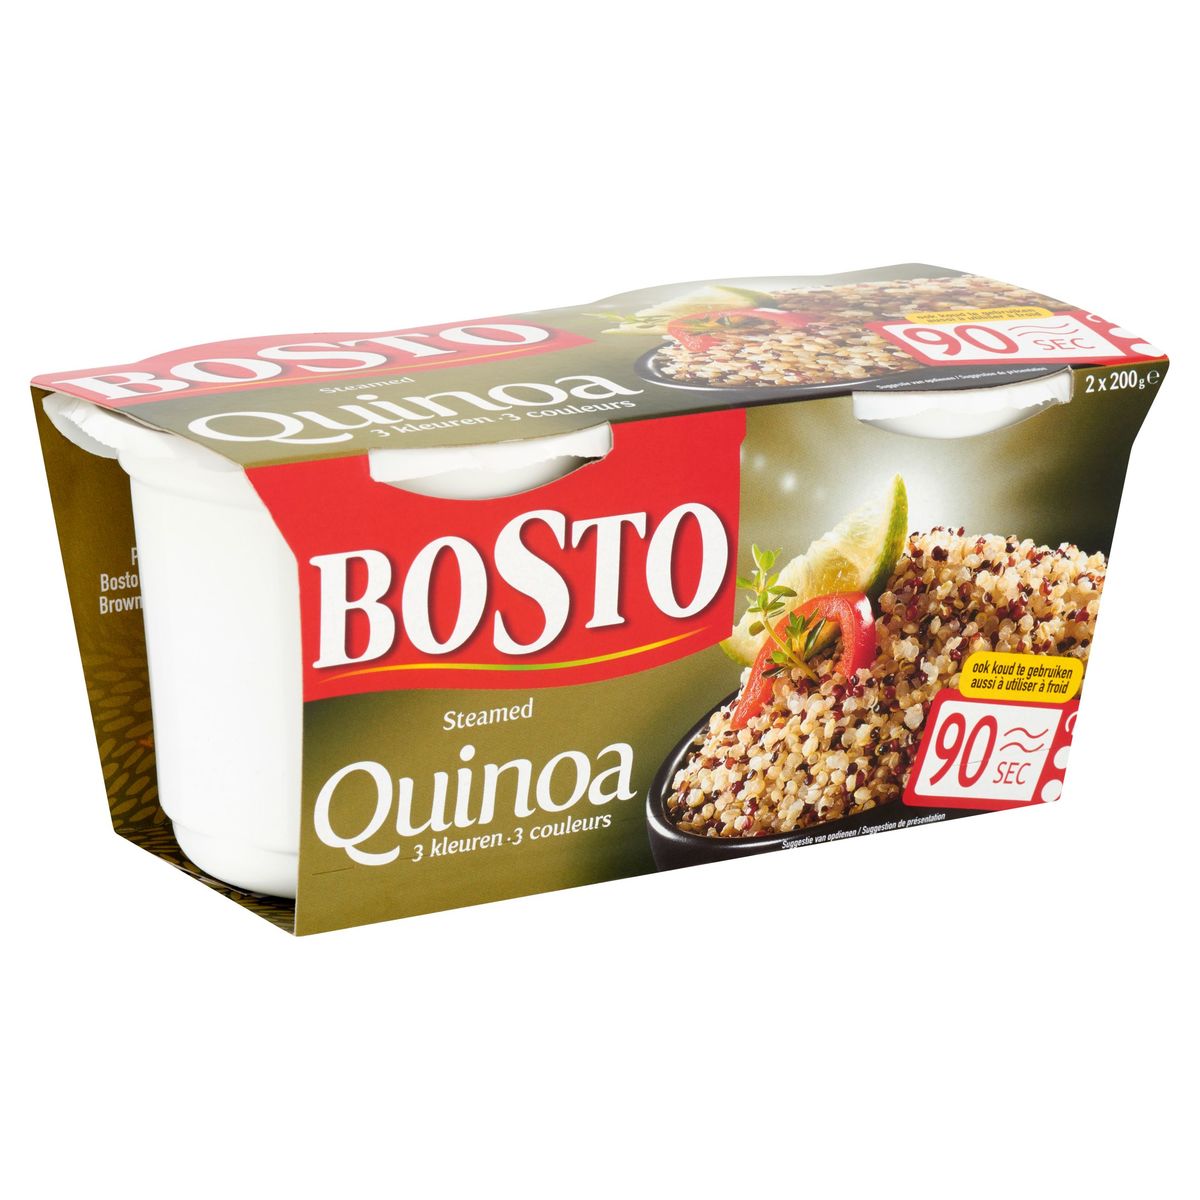 Bosto Steamed Quinoa 3 Couleurs 2 x 200 g